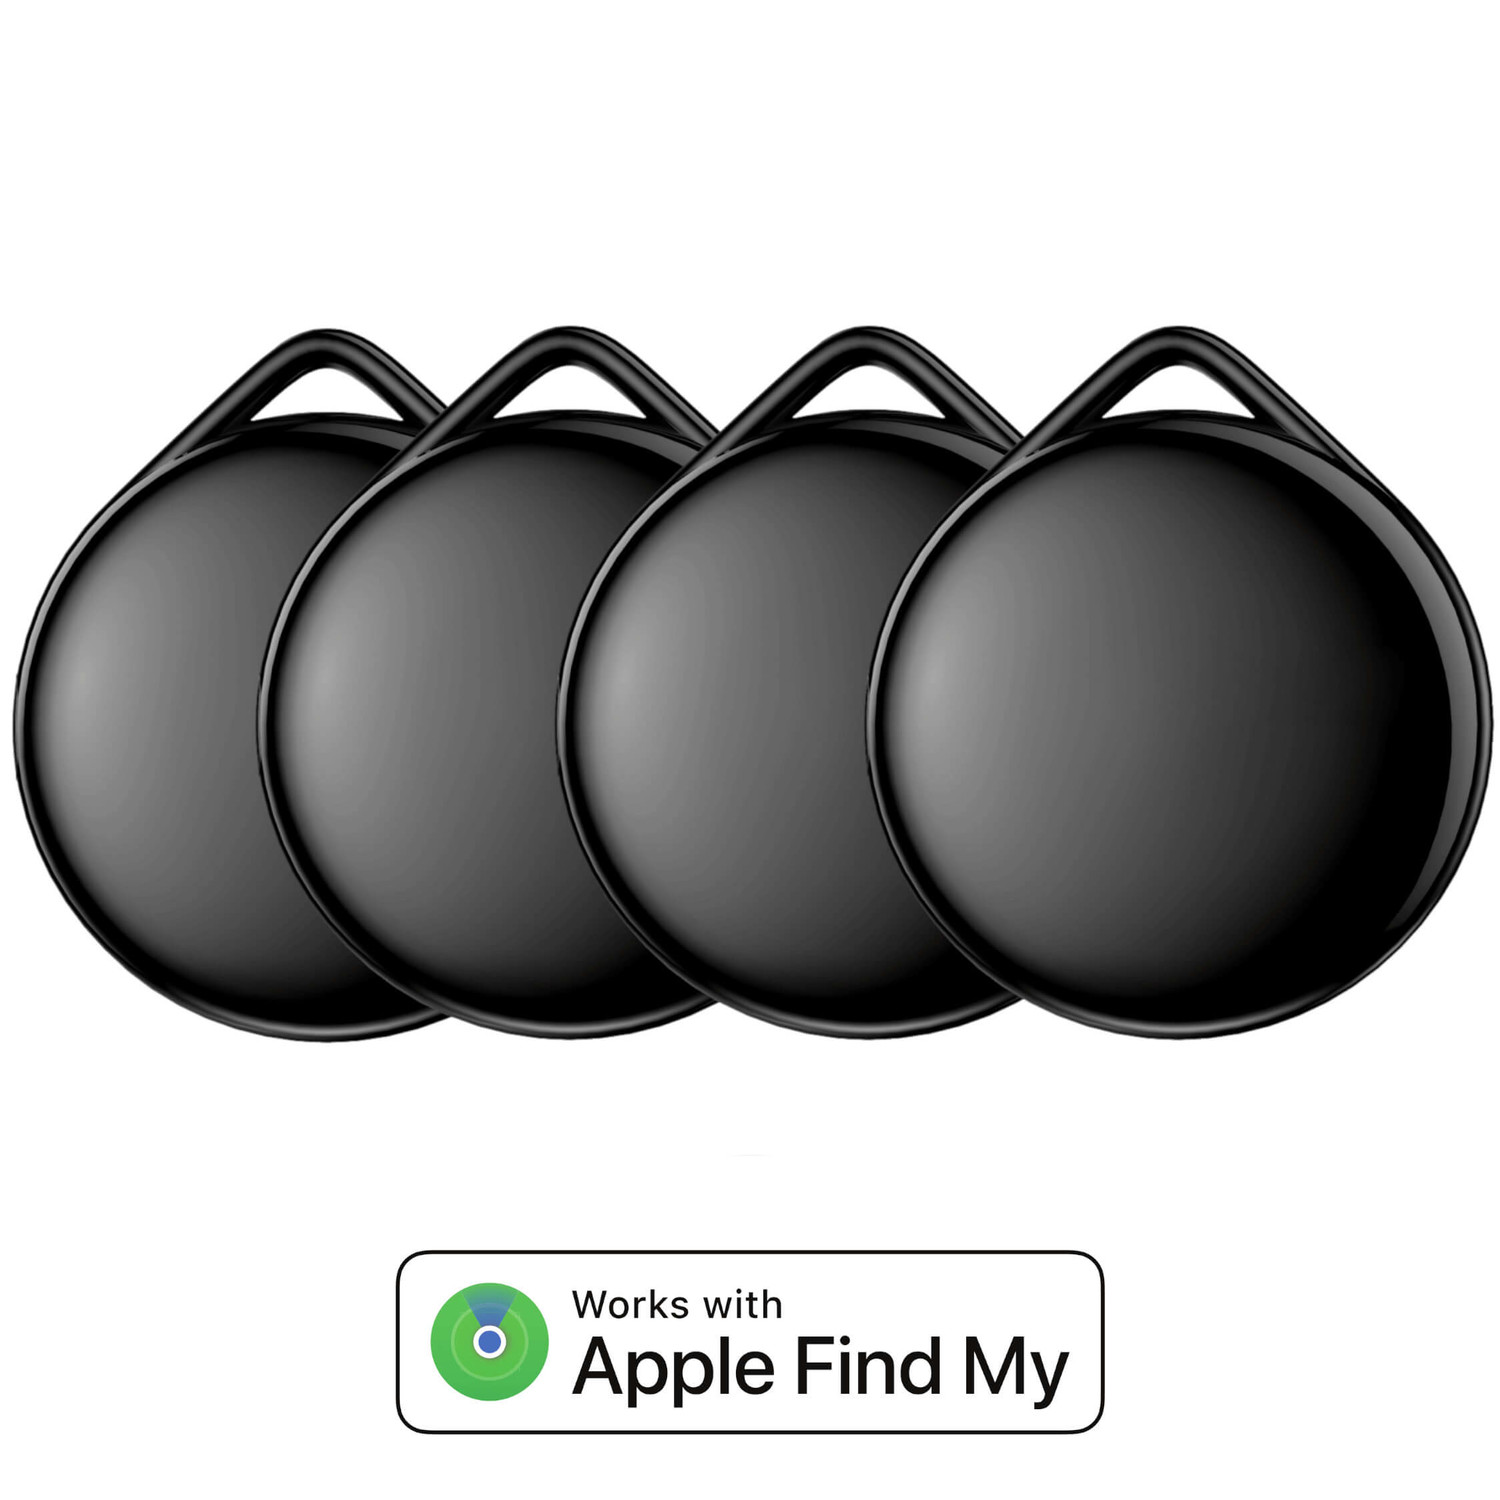 Set 4 ks ARMODD iTag černý bez loga (AirTag alternativa) s podporou Apple Find My (Najít)